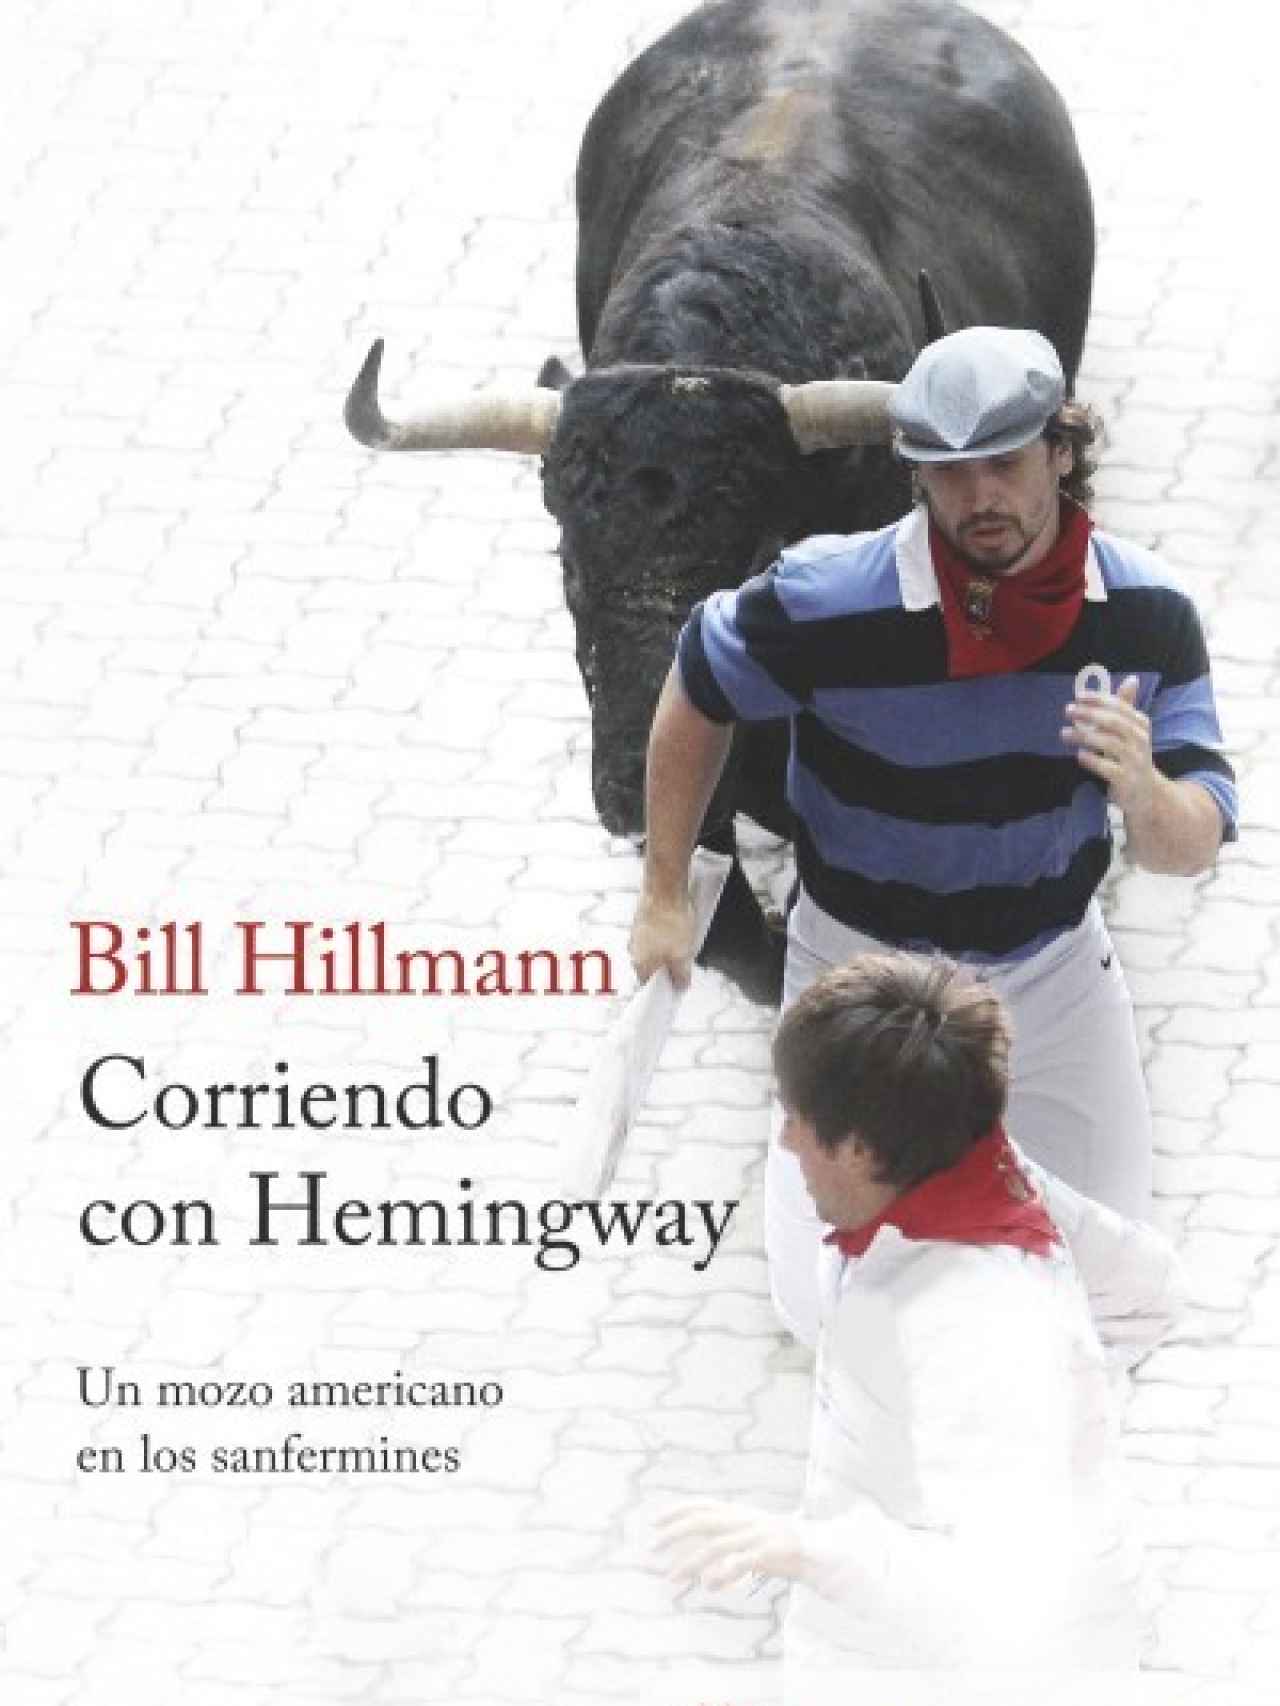 Portada del libro de Bill Hillmann.